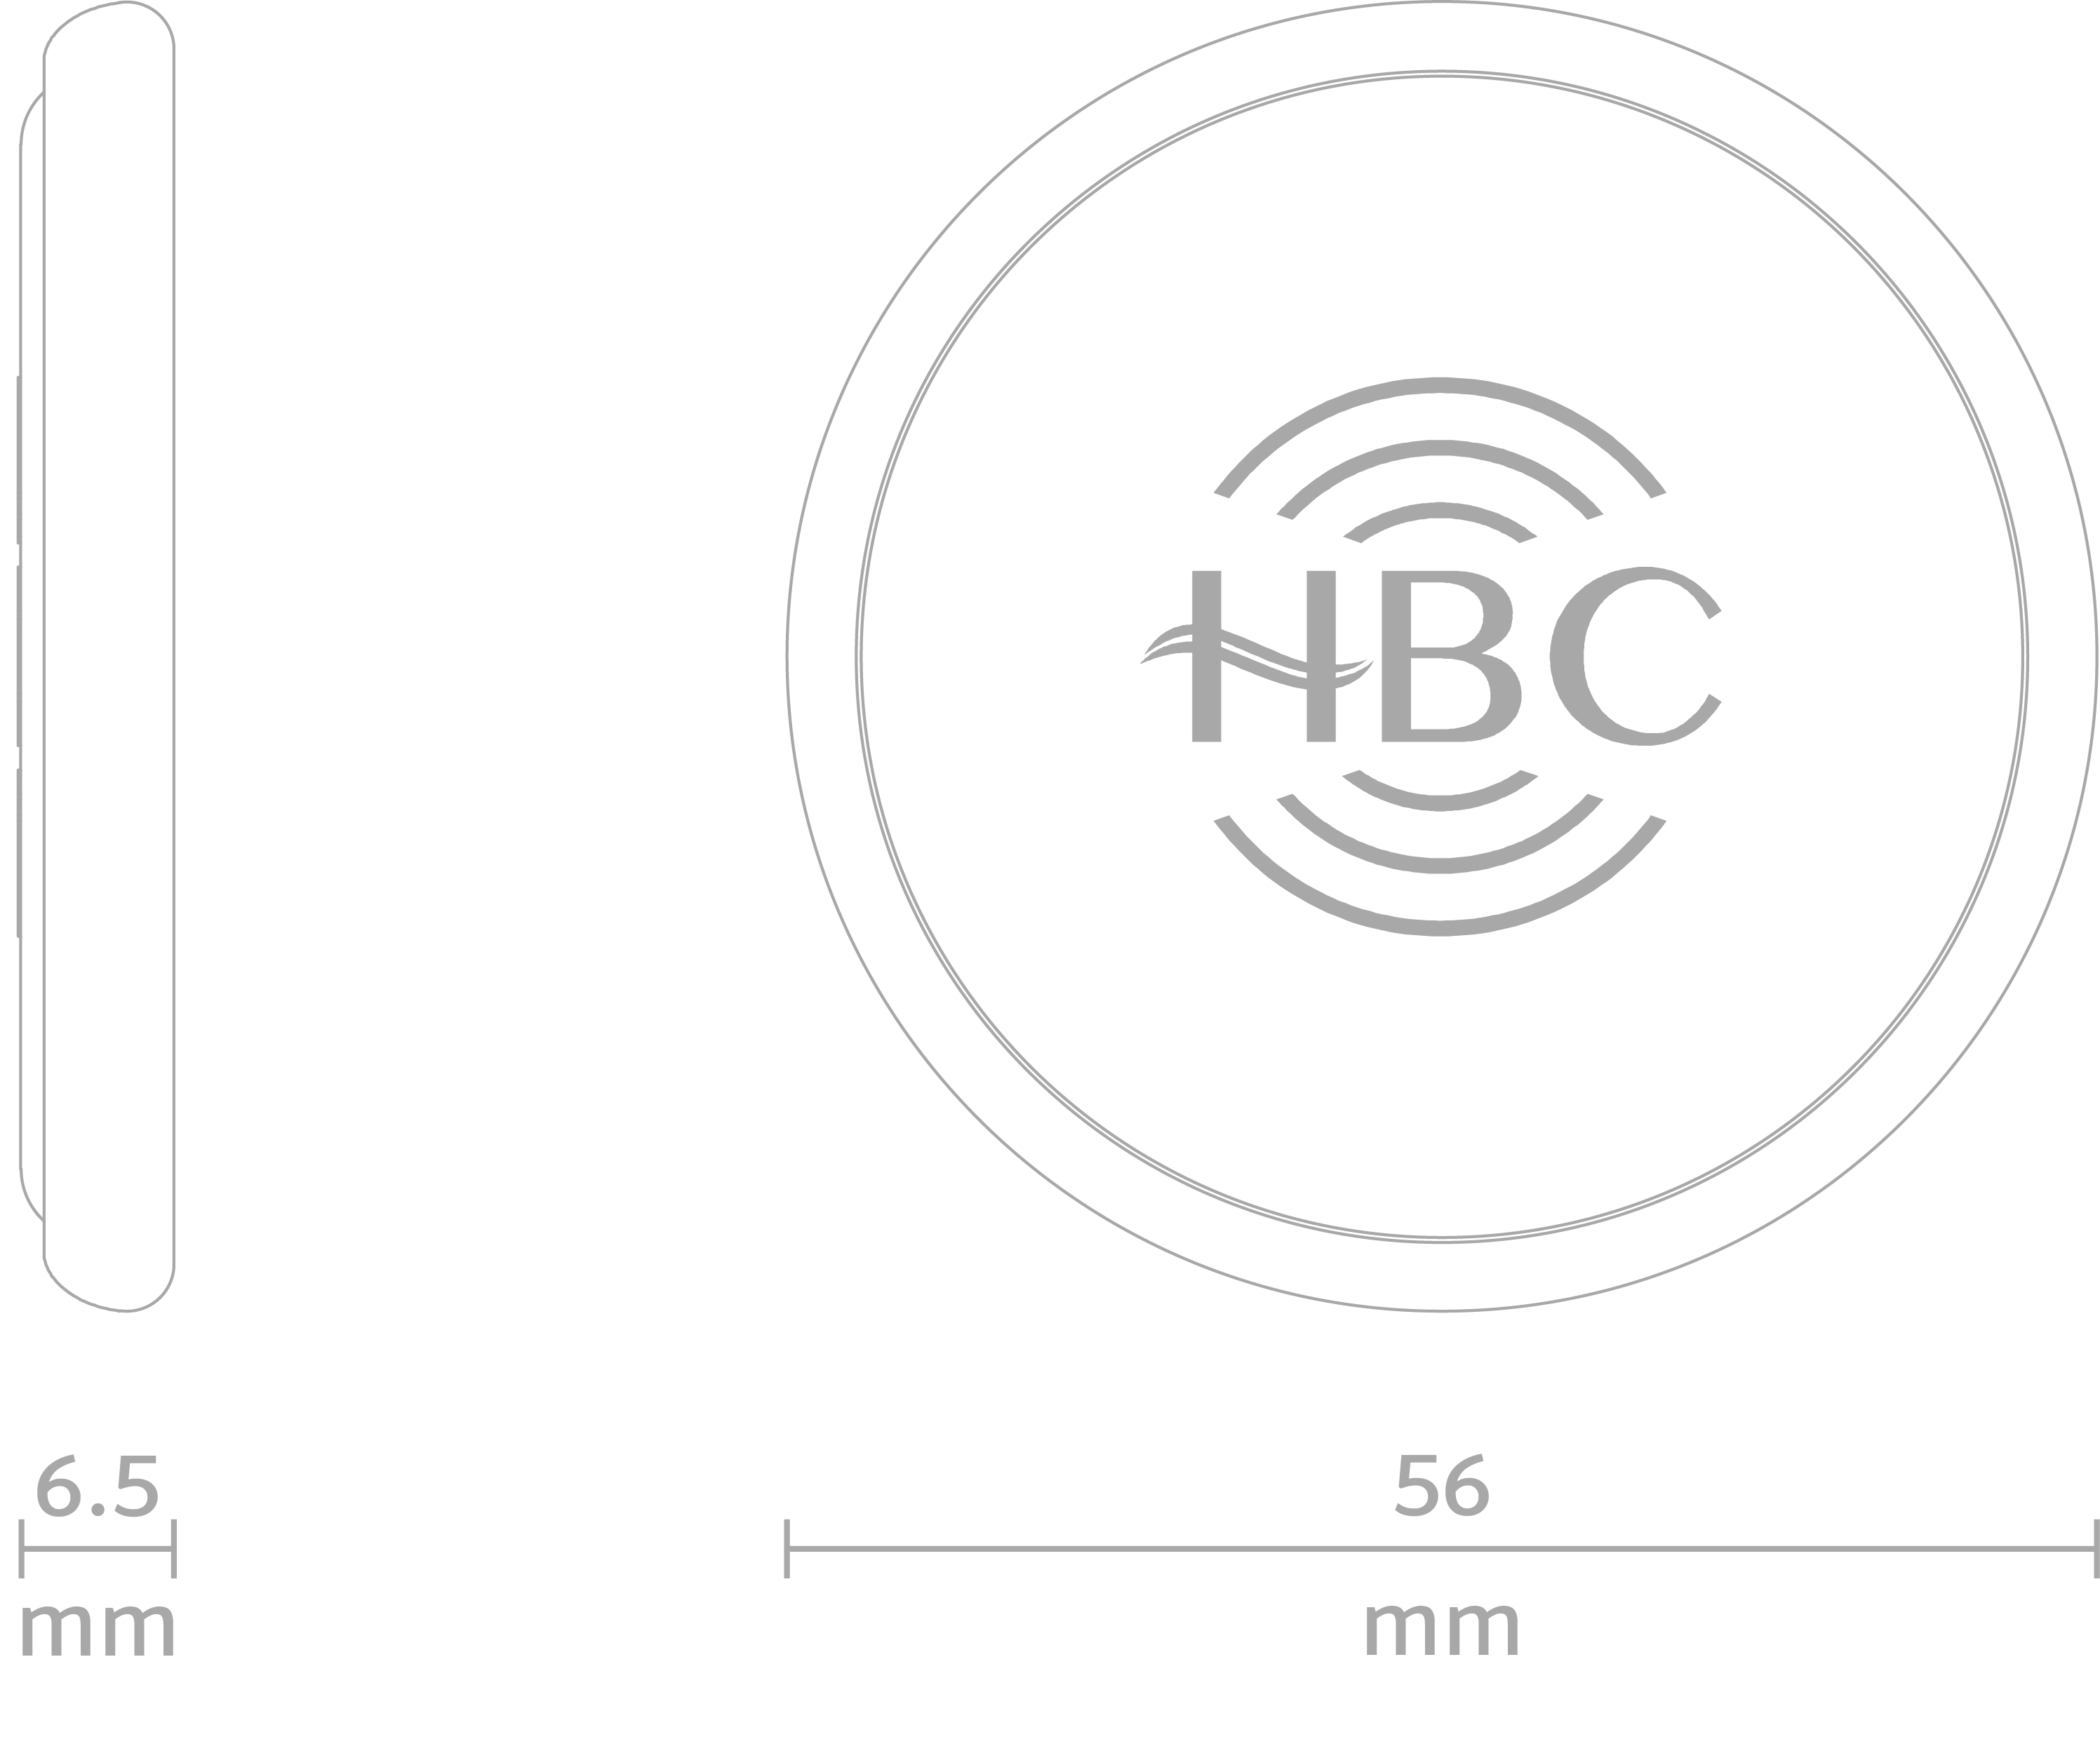 HBC specifications